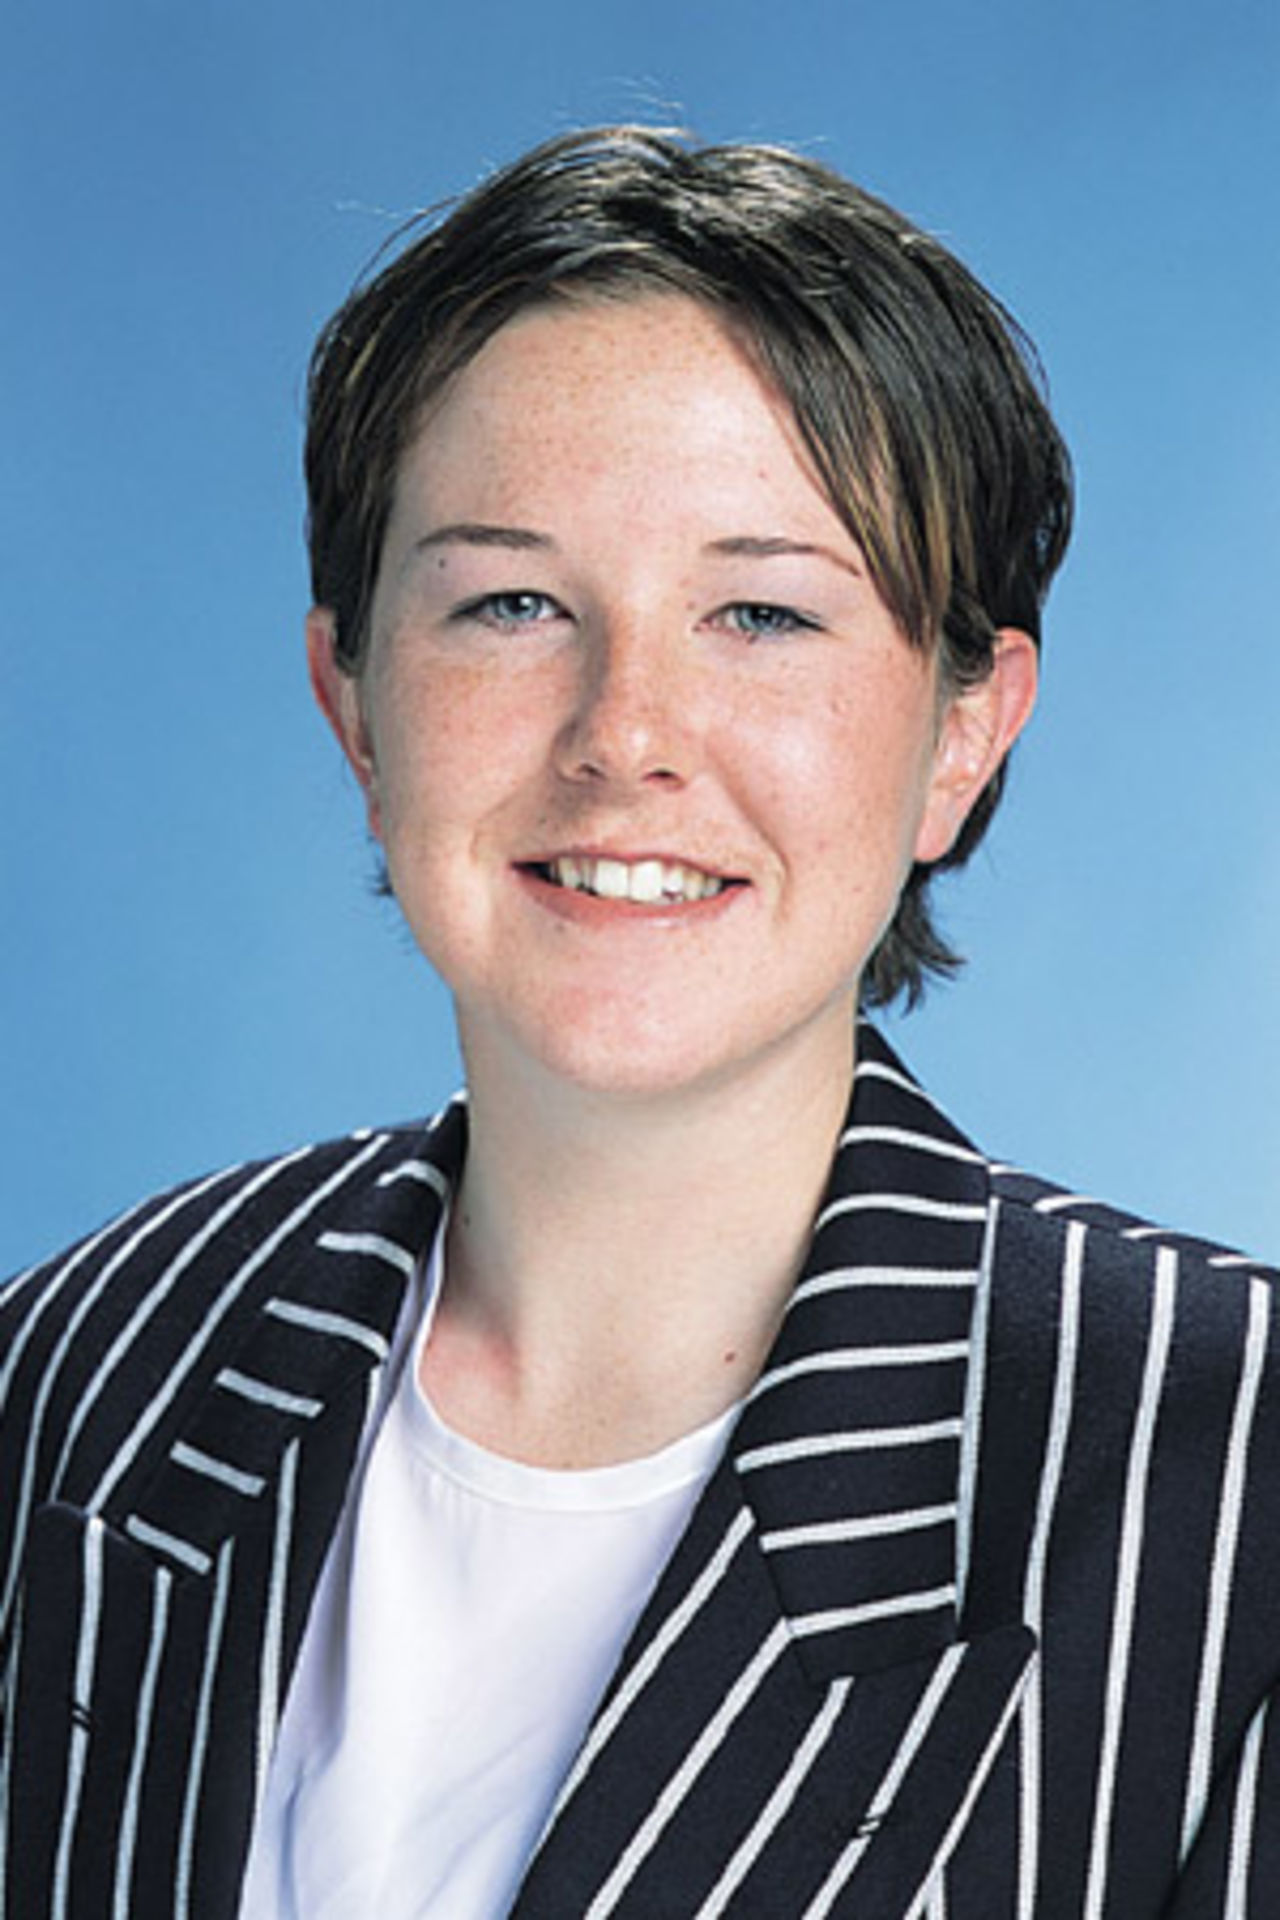 Portrait of Sarah Burke - New Zealand women's player in the 2001/02 season.